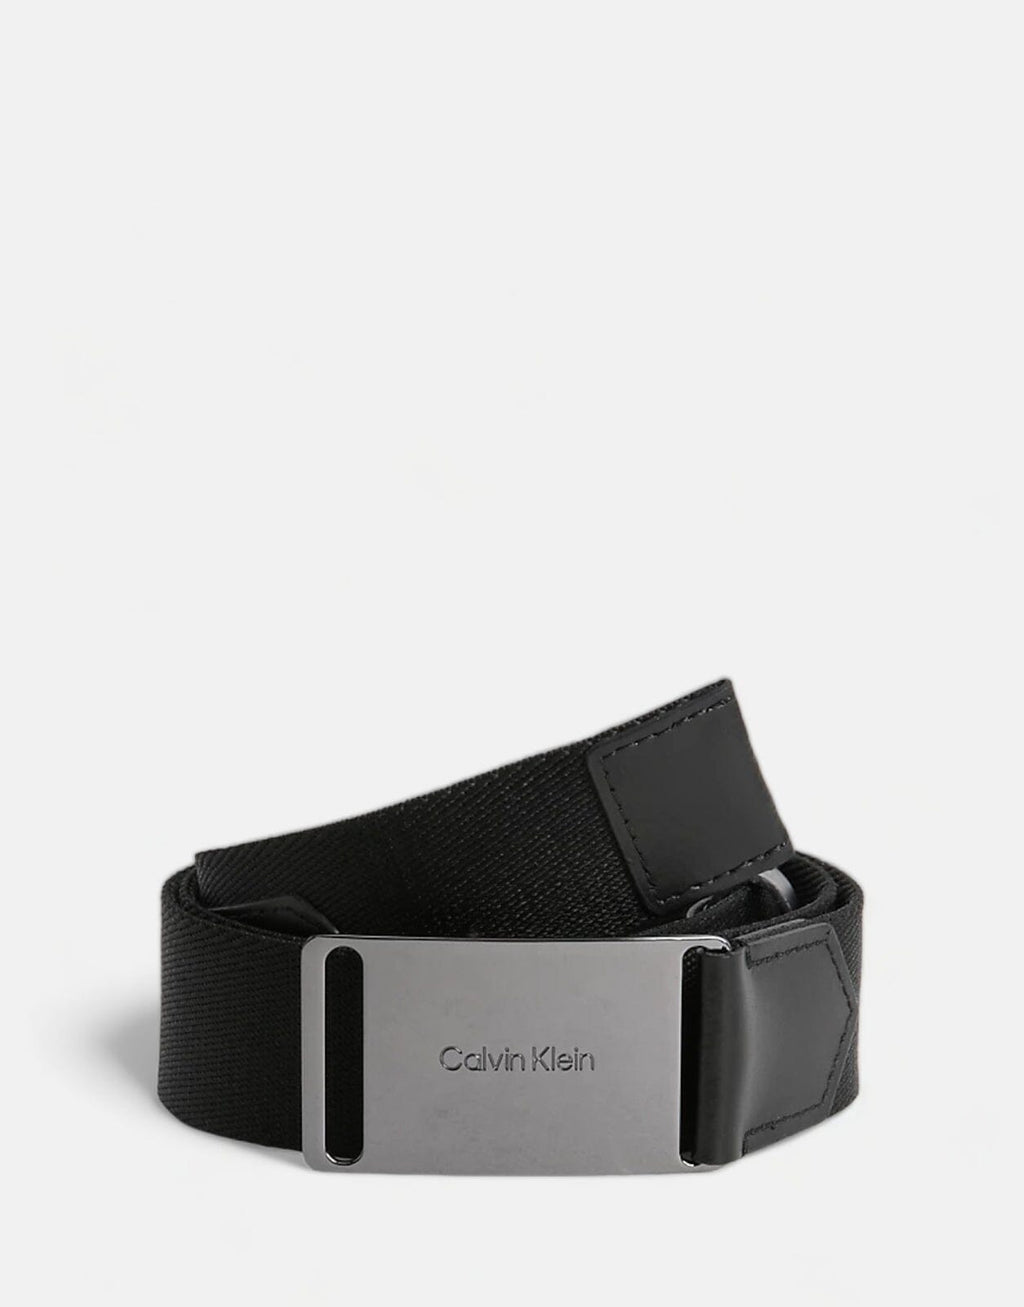 Calvin Klein Plaque Webbing 35mm Belt